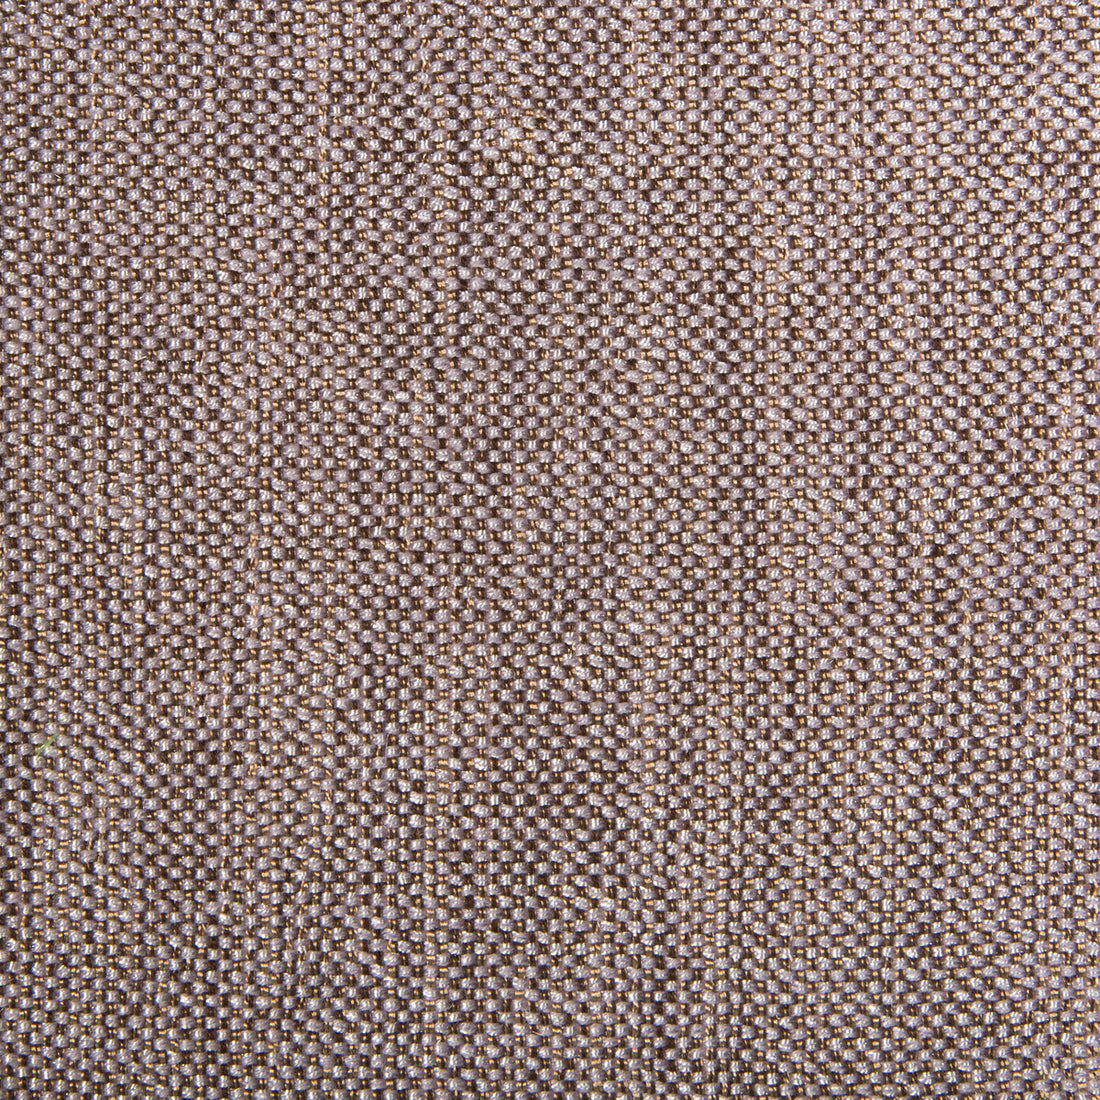 Kravet Smart fabric in 34939-110 color - pattern 34939.110.0 - by Kravet Smart